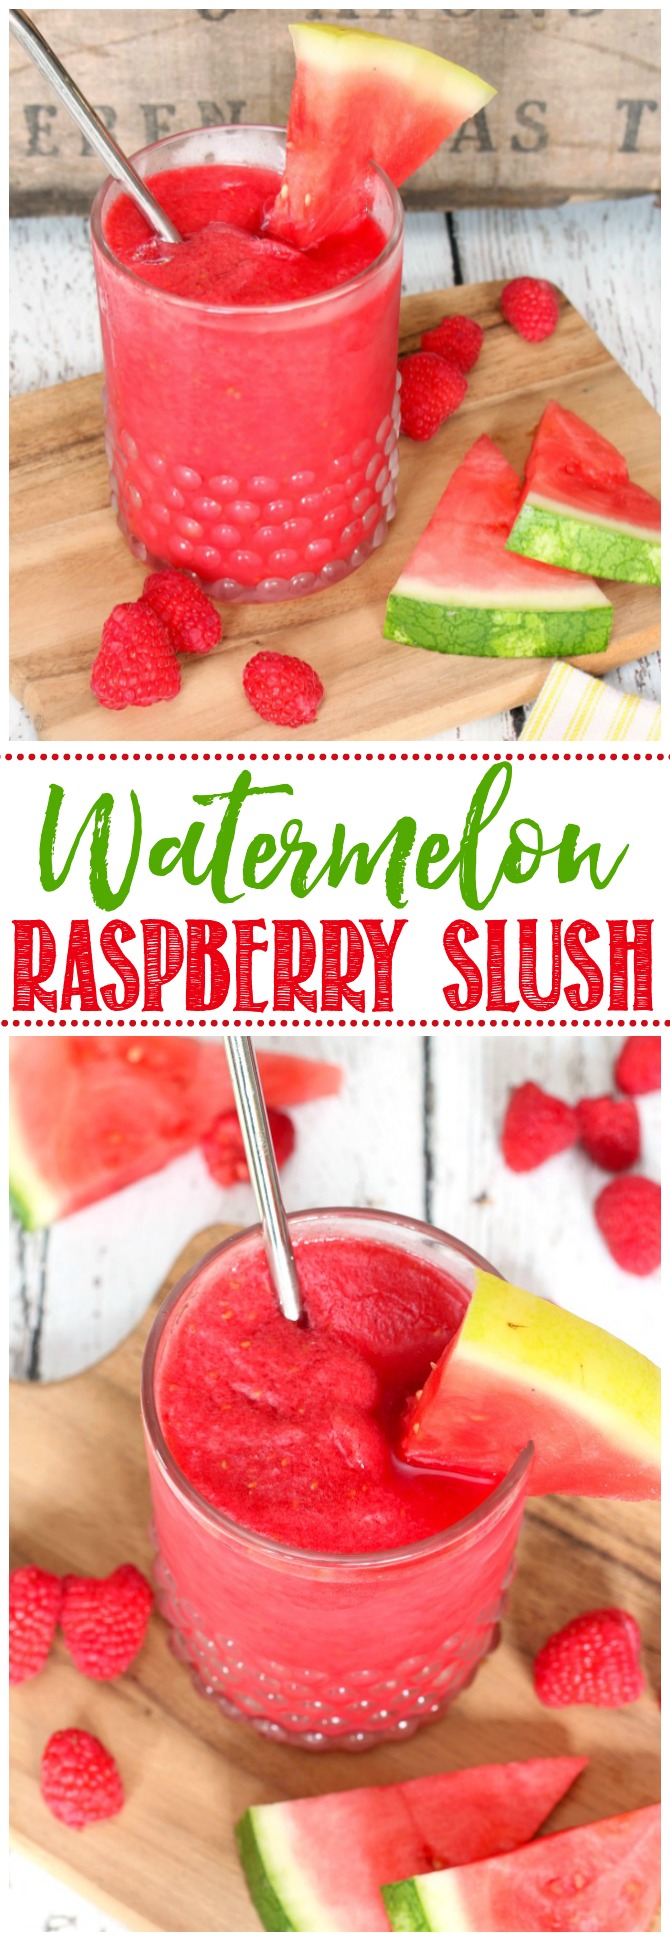 Glass of raspberry watermelon slush with a slice of watermelon.